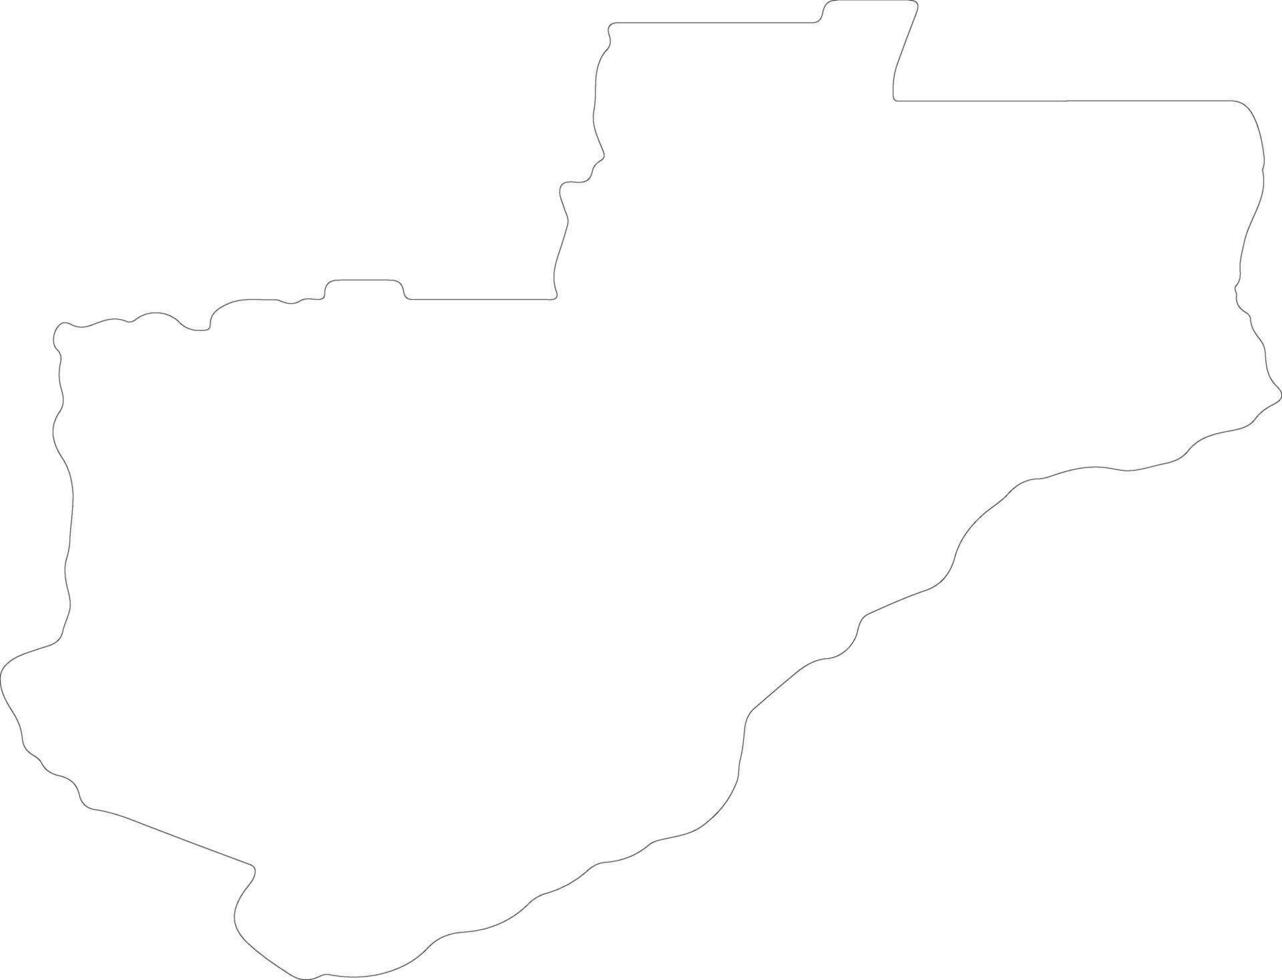 lunda norte Angola schets kaart vector